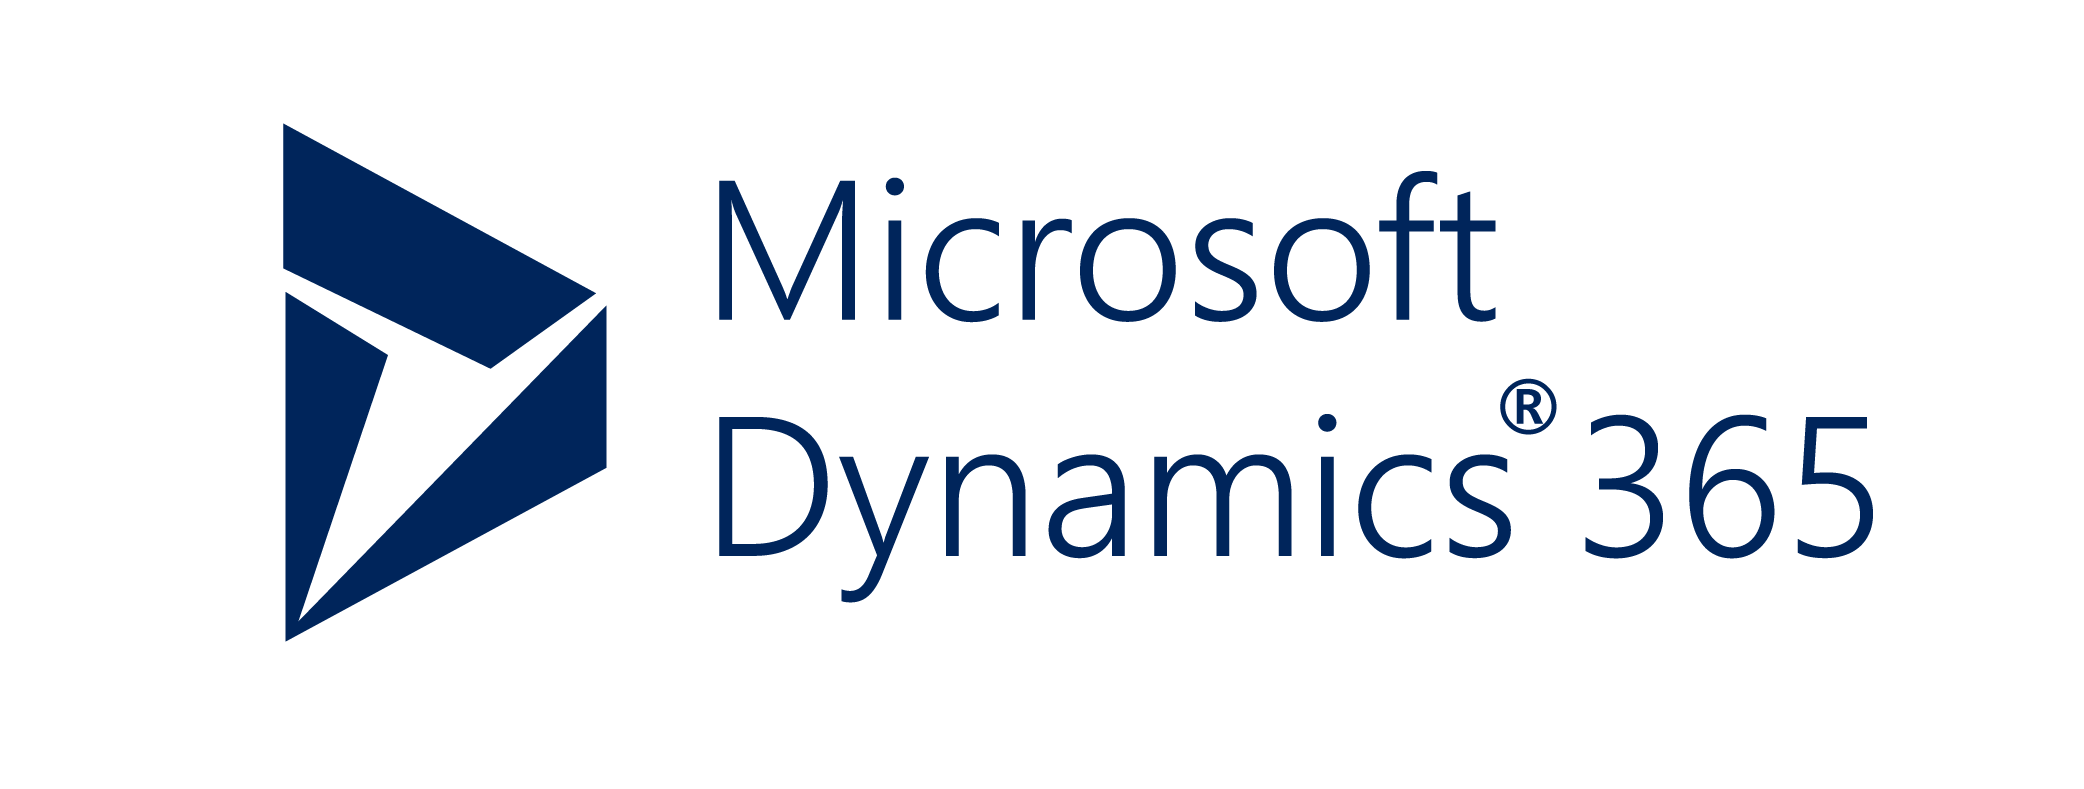 Microsoft Dynamics Logo - Dynamics 365 Logo (1). Planning, Forecasting, Consolidation